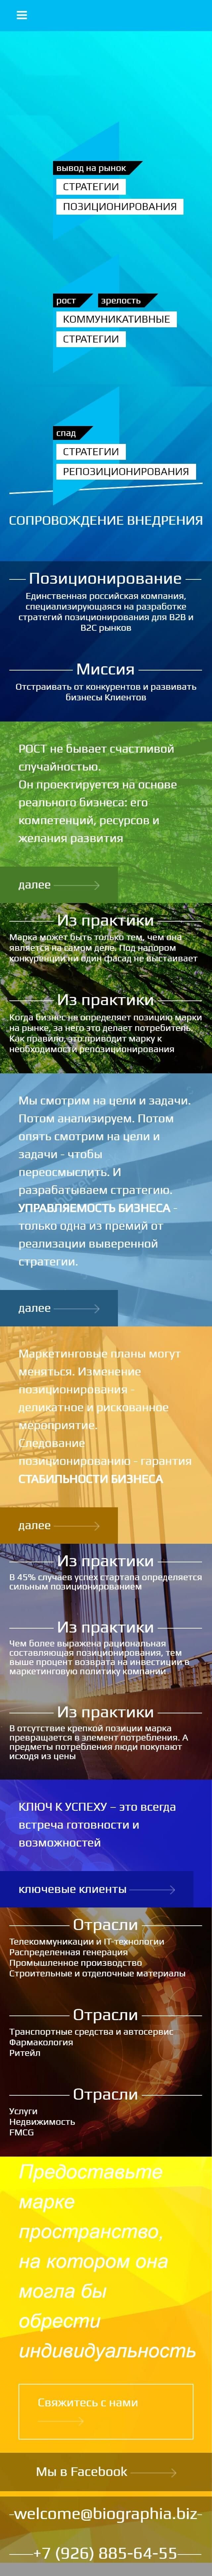 image of the mobile version of the site «Biographiya»